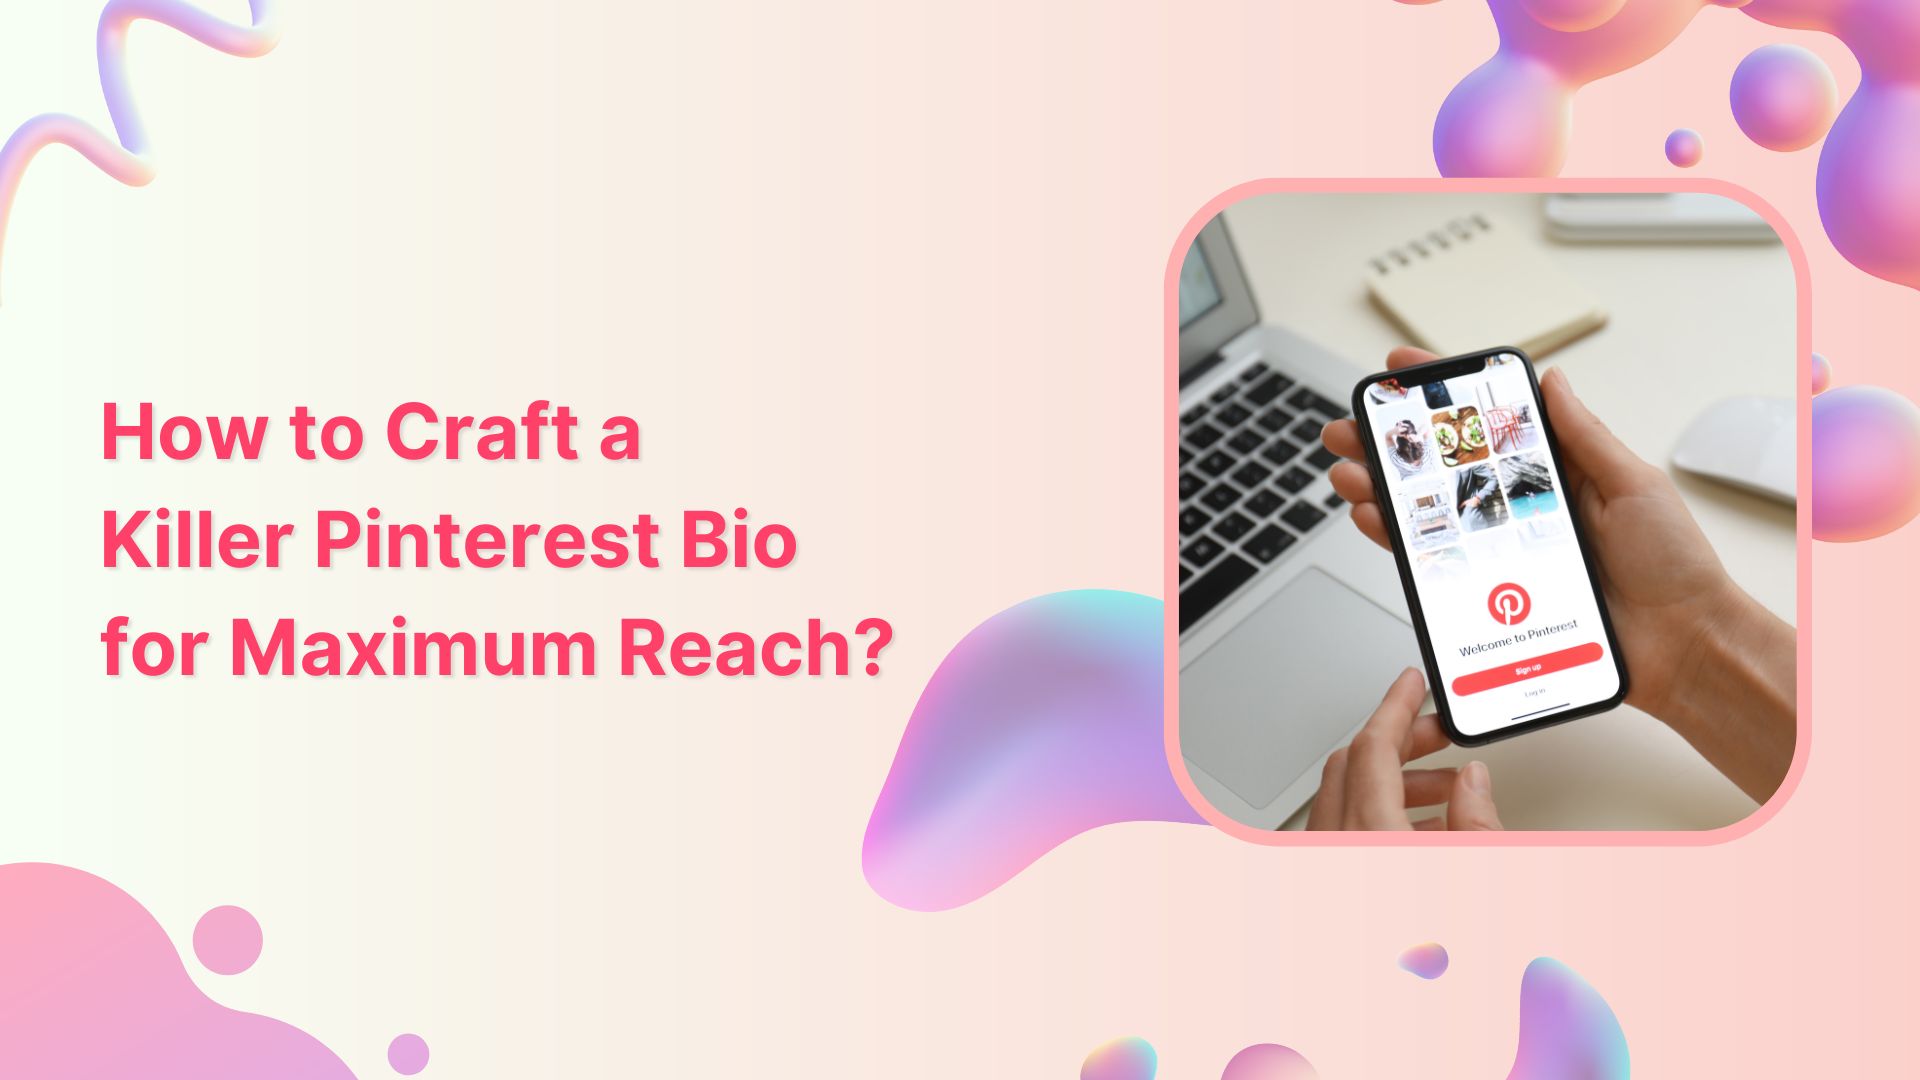 How to Craft a Killer Pinterest Bio for Maximum Reach?